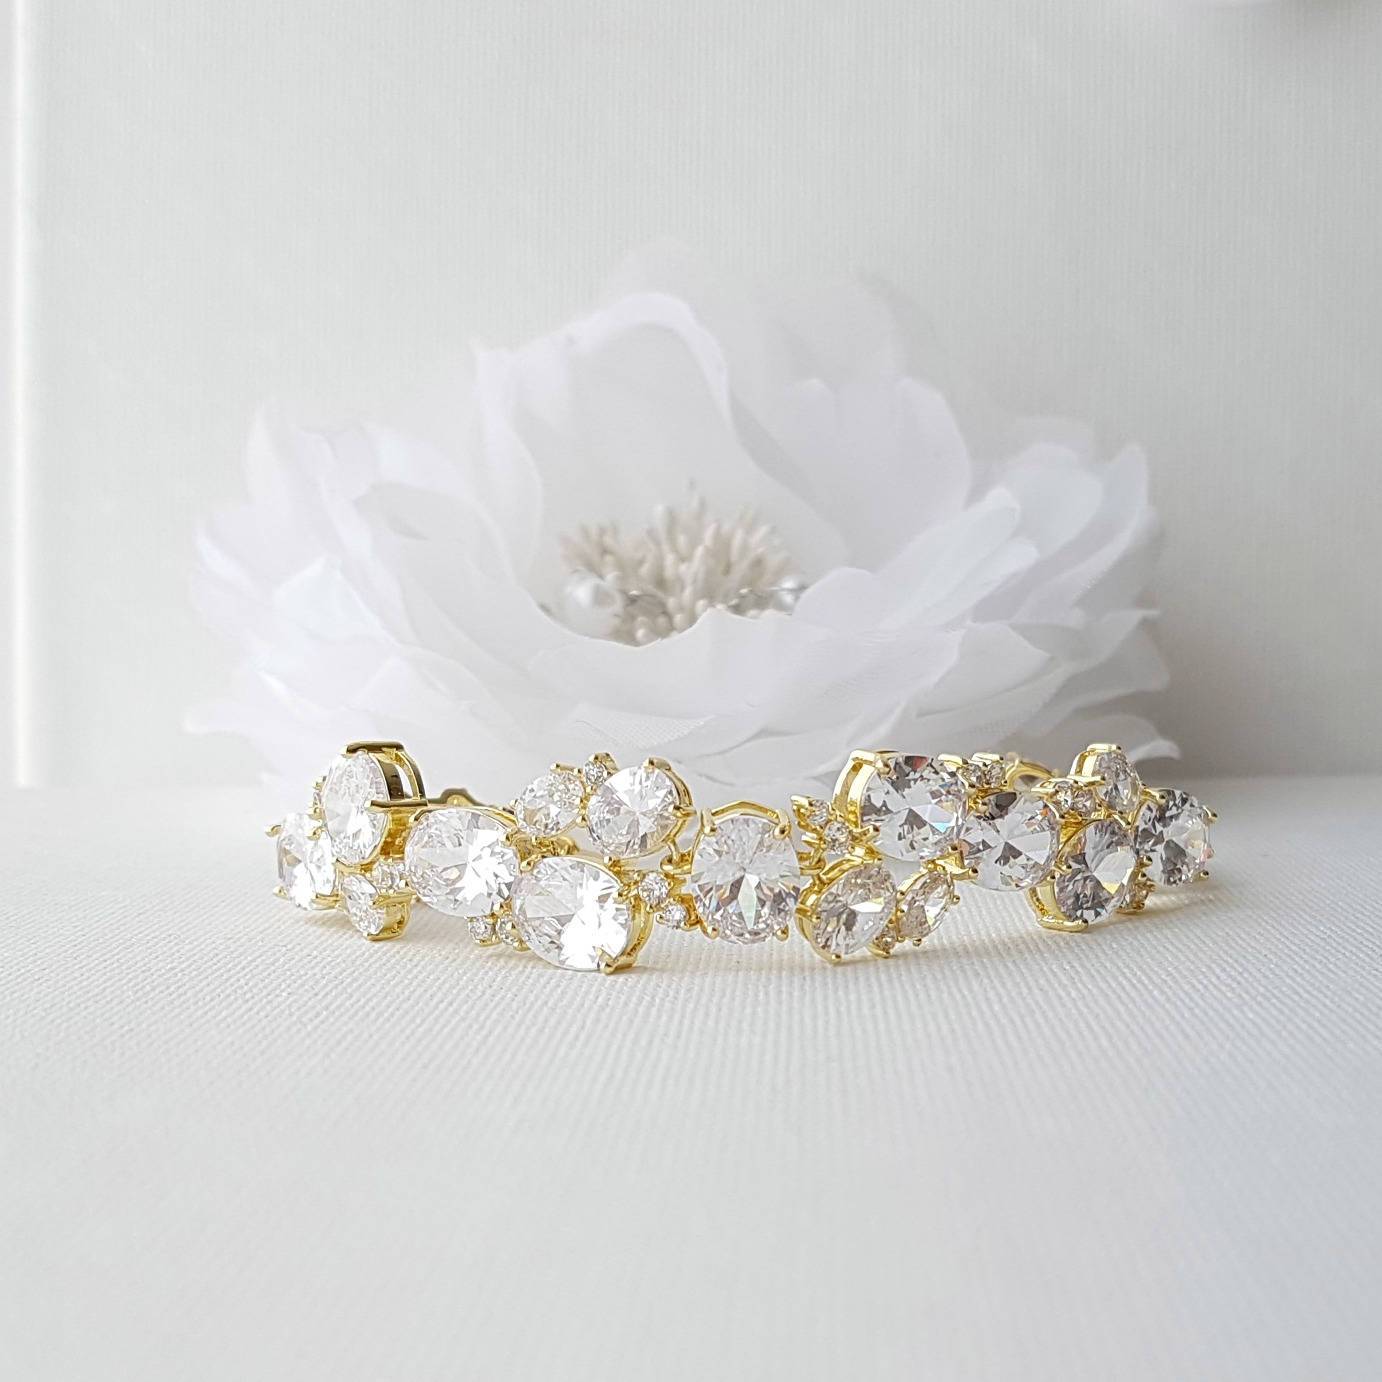 Wedding Crystal Bracelet, Bridal Jewelry, Bridal Bracelet, Rose Gold Bracelet, Gold Wedding Bracelet, Cubic Zirconia Bracelet, Emily - PoetryDesigns